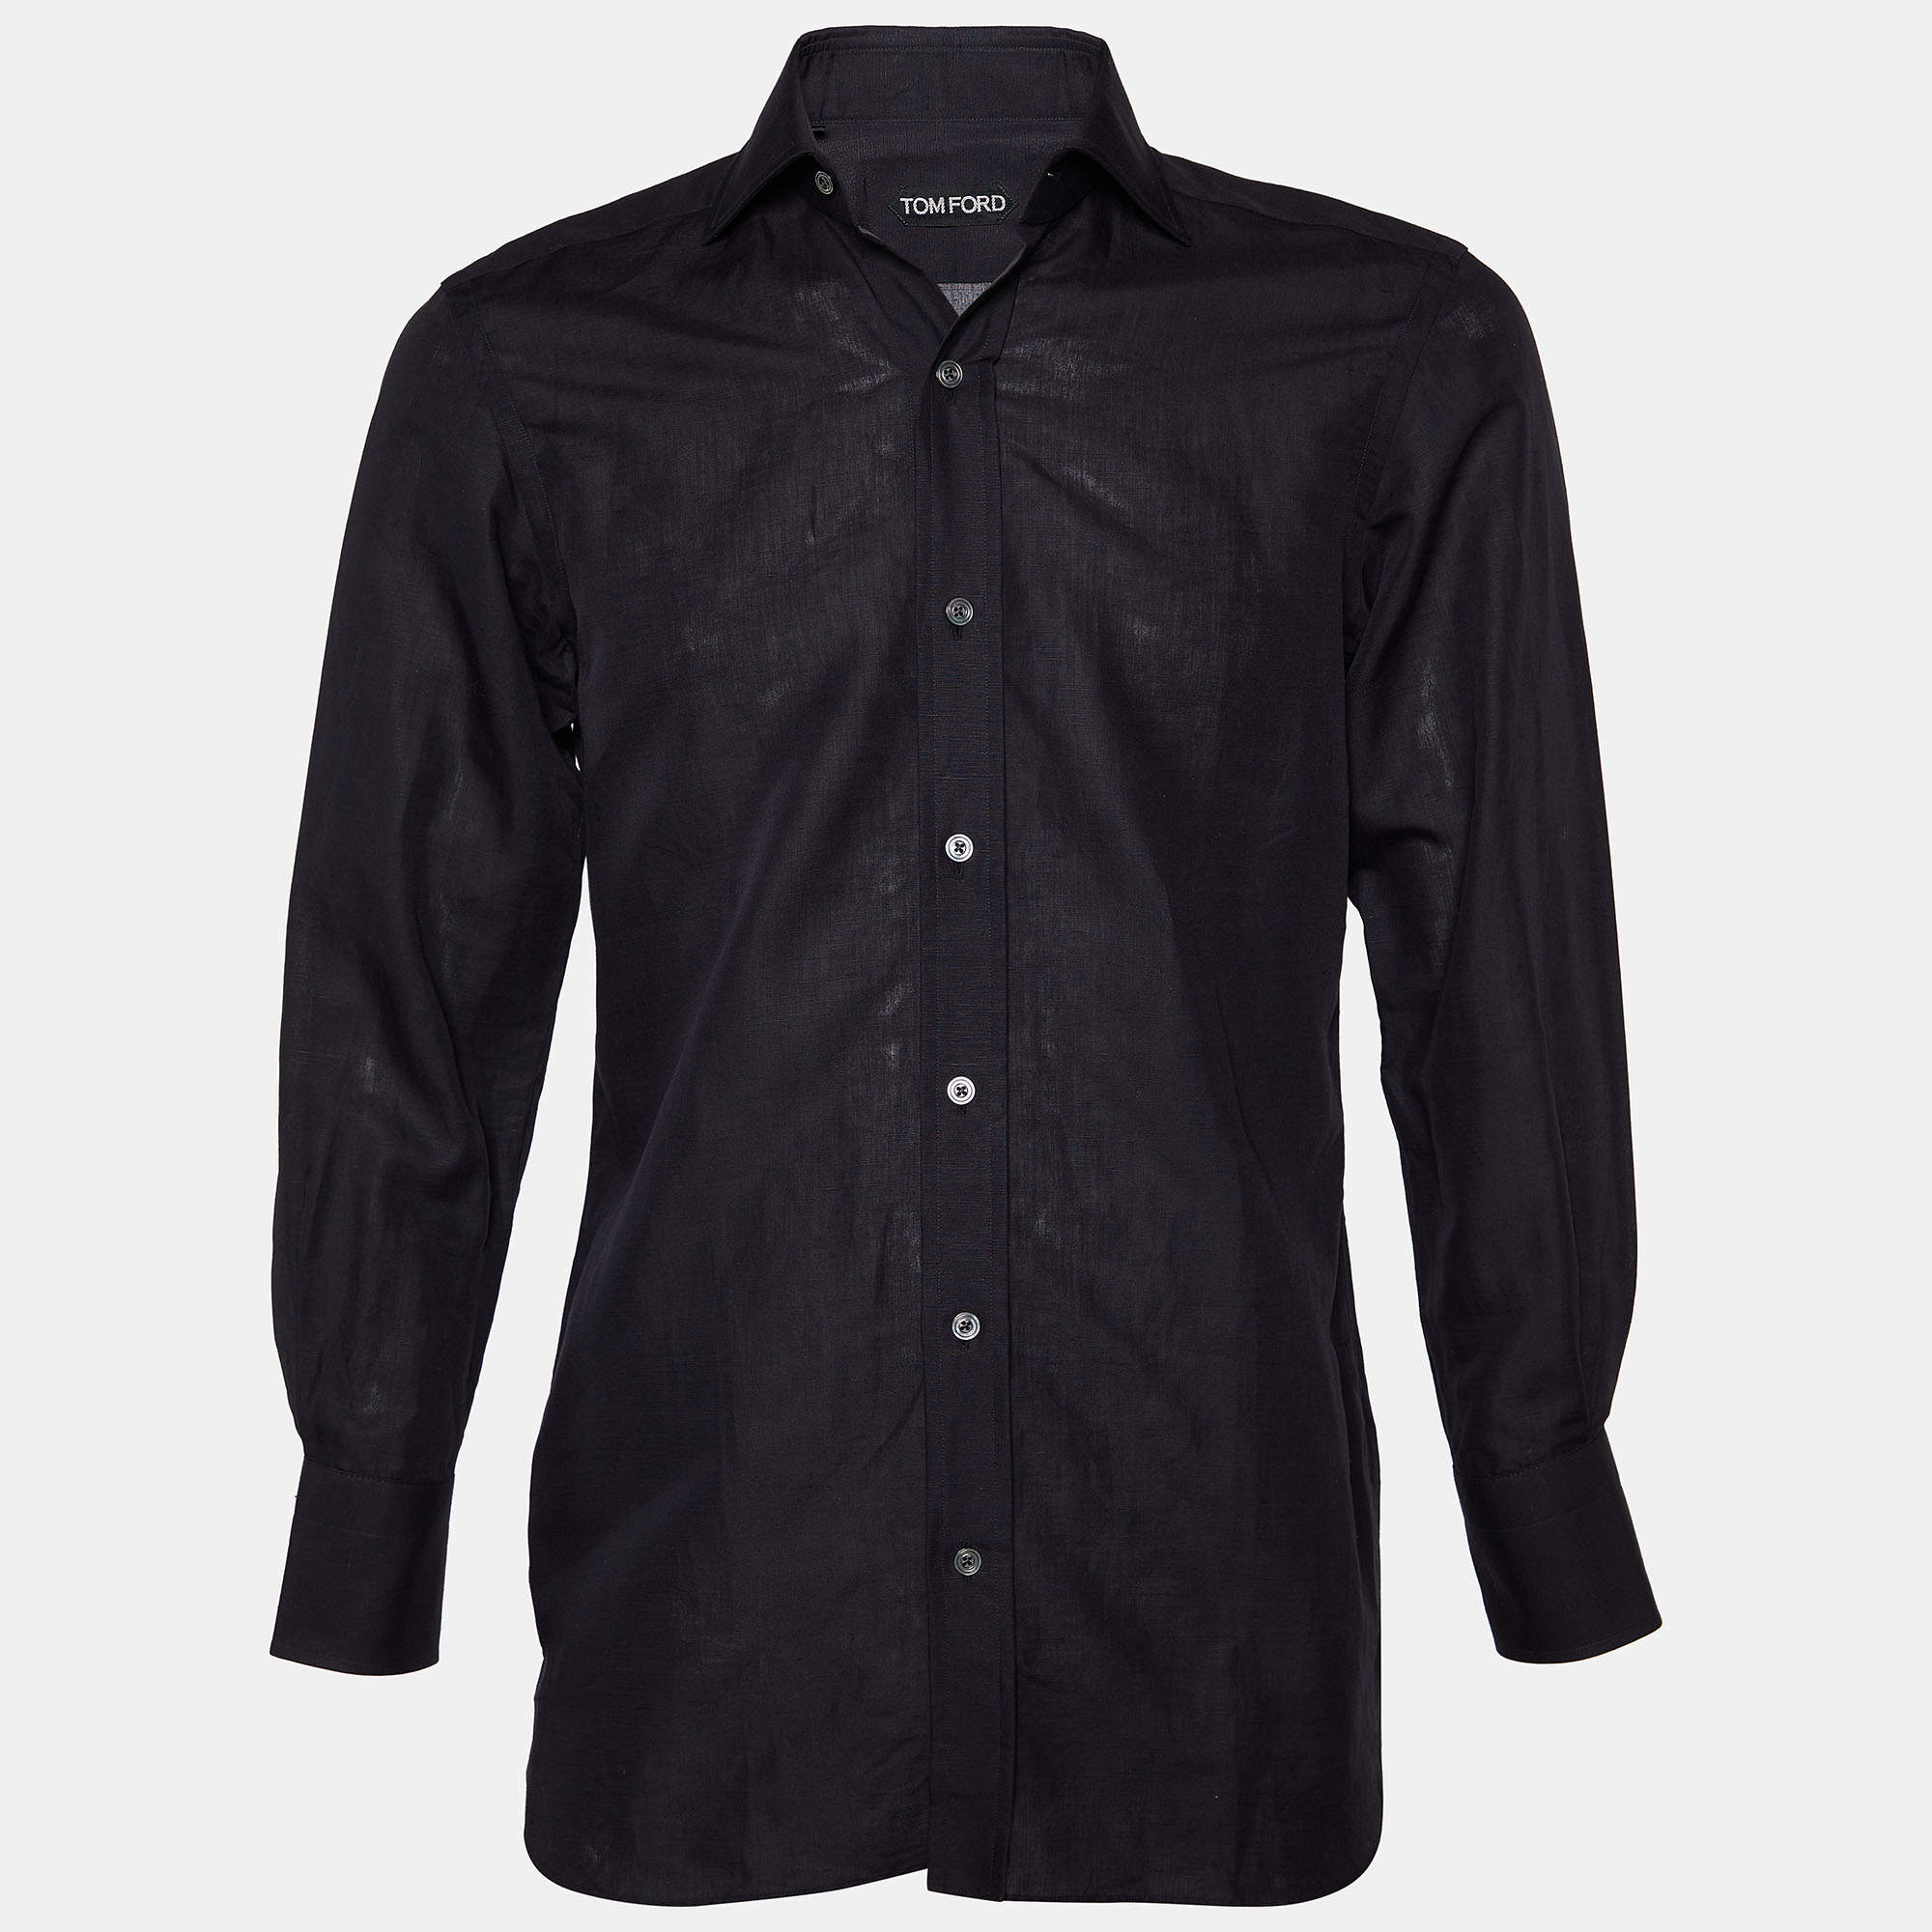 Nathaniel Ward emne problem Tom Ford Black Cotton Button Front Shirt S Tom Ford | TLC